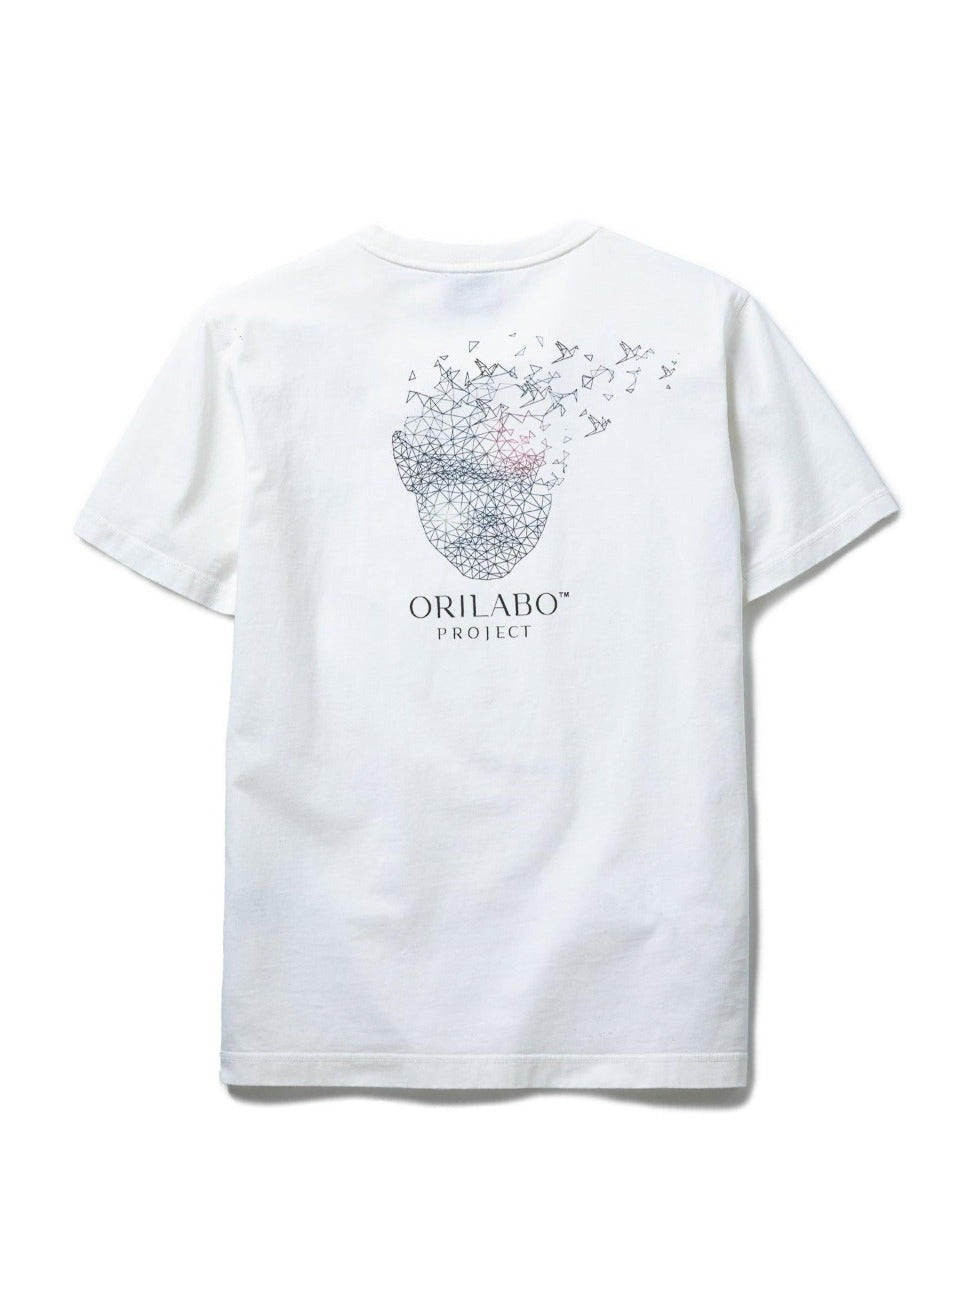 Women's Flying Head T-shirt - White - ORILABO Project